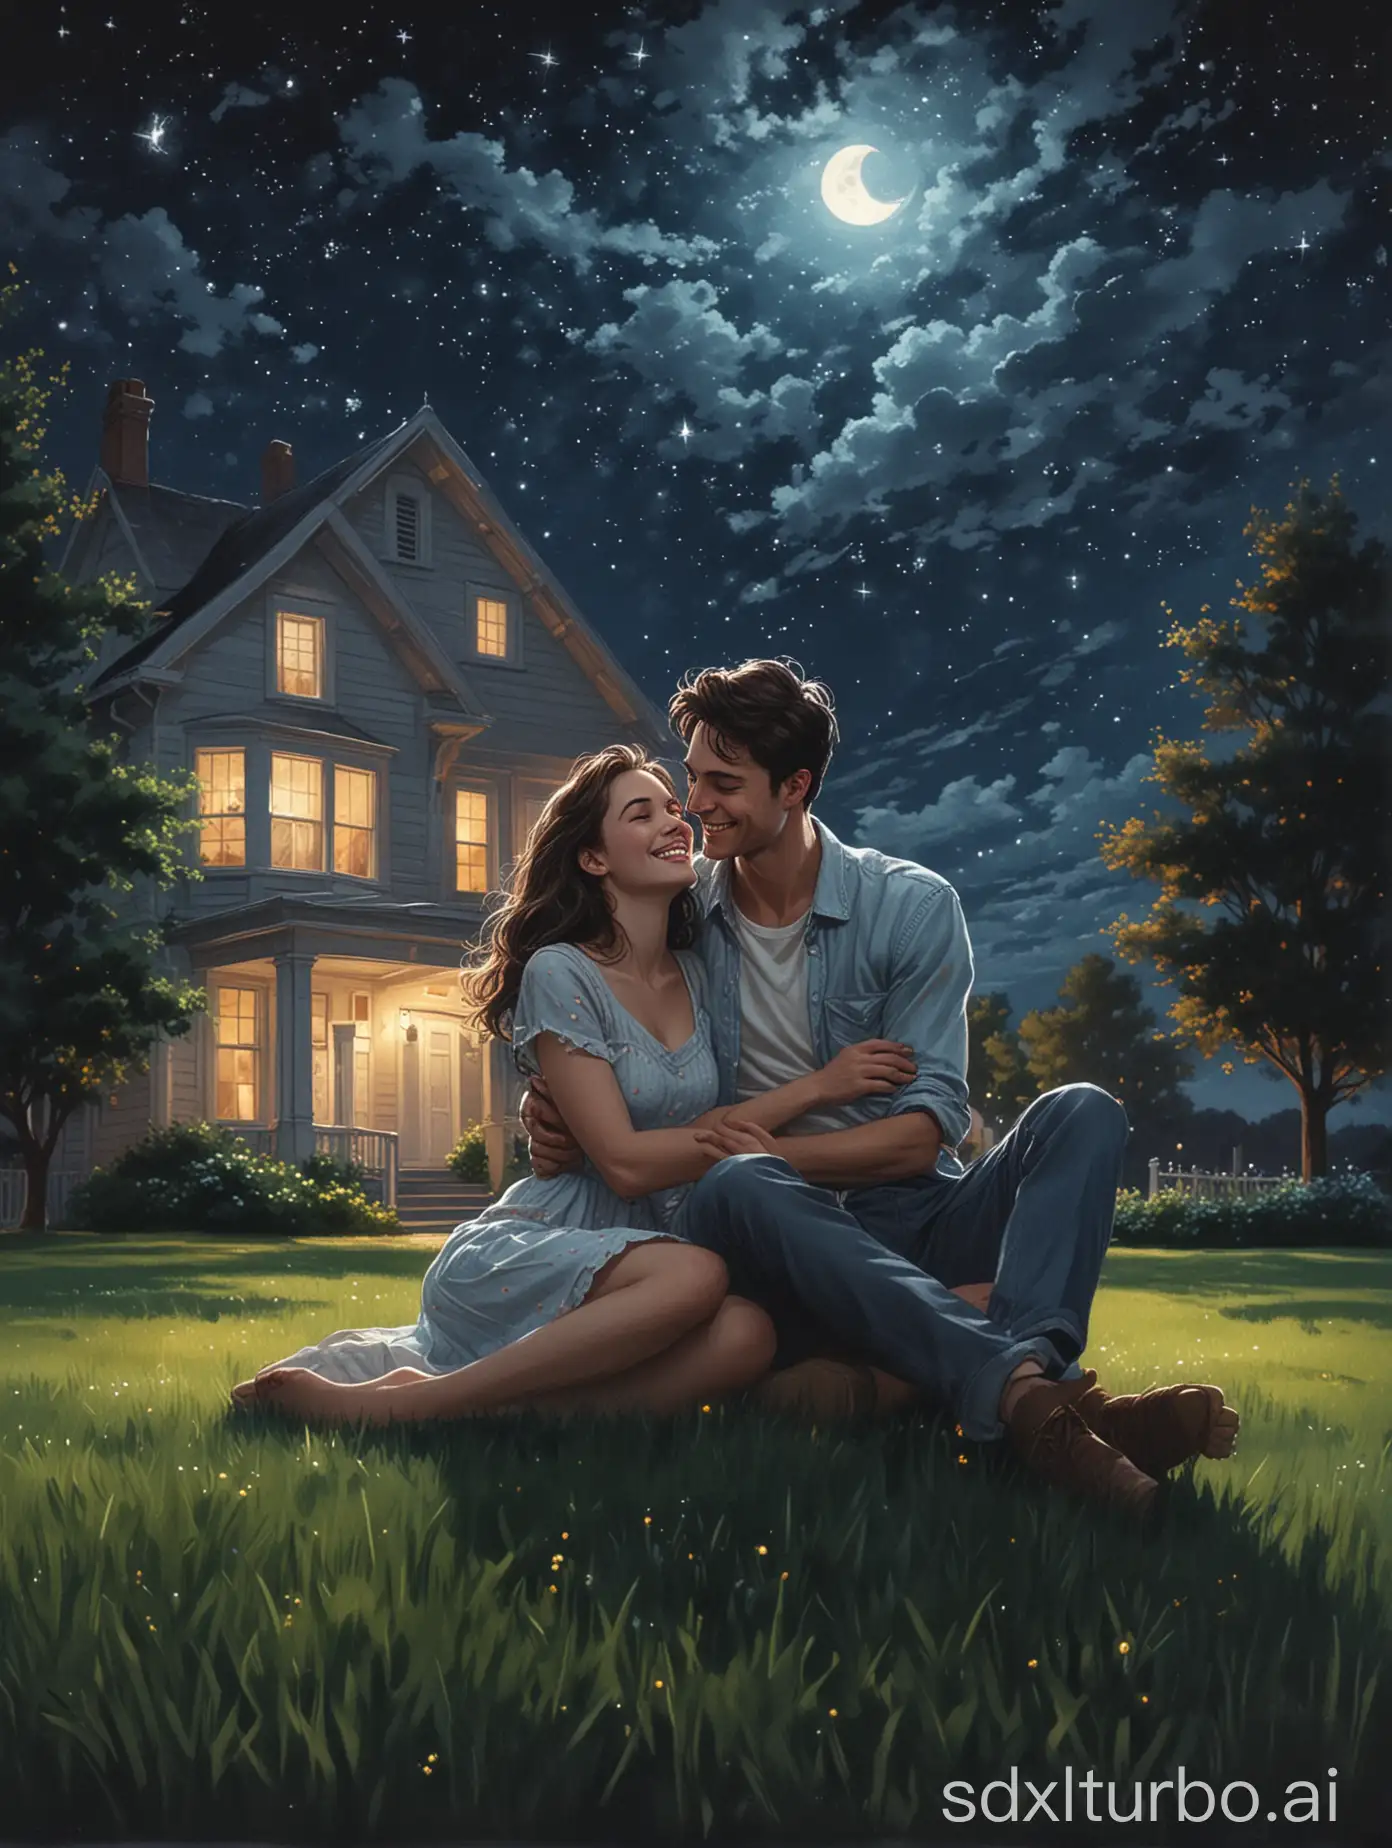 Romantic-Couple-Cuddling-Under-Starry-Night-Sky